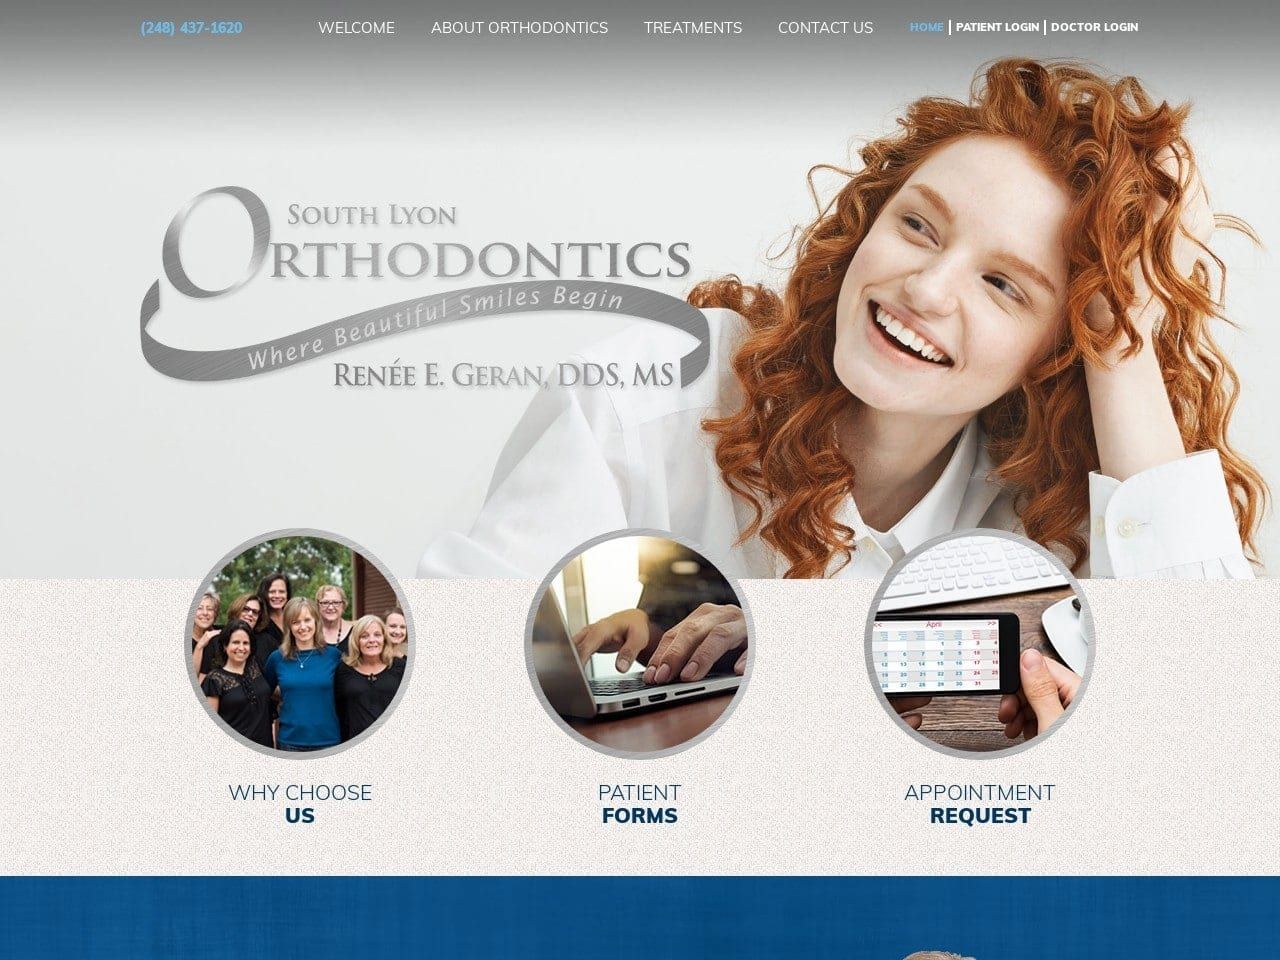 South Lyon Orthodontics Website Screenshot from southlyonorthodontics.net